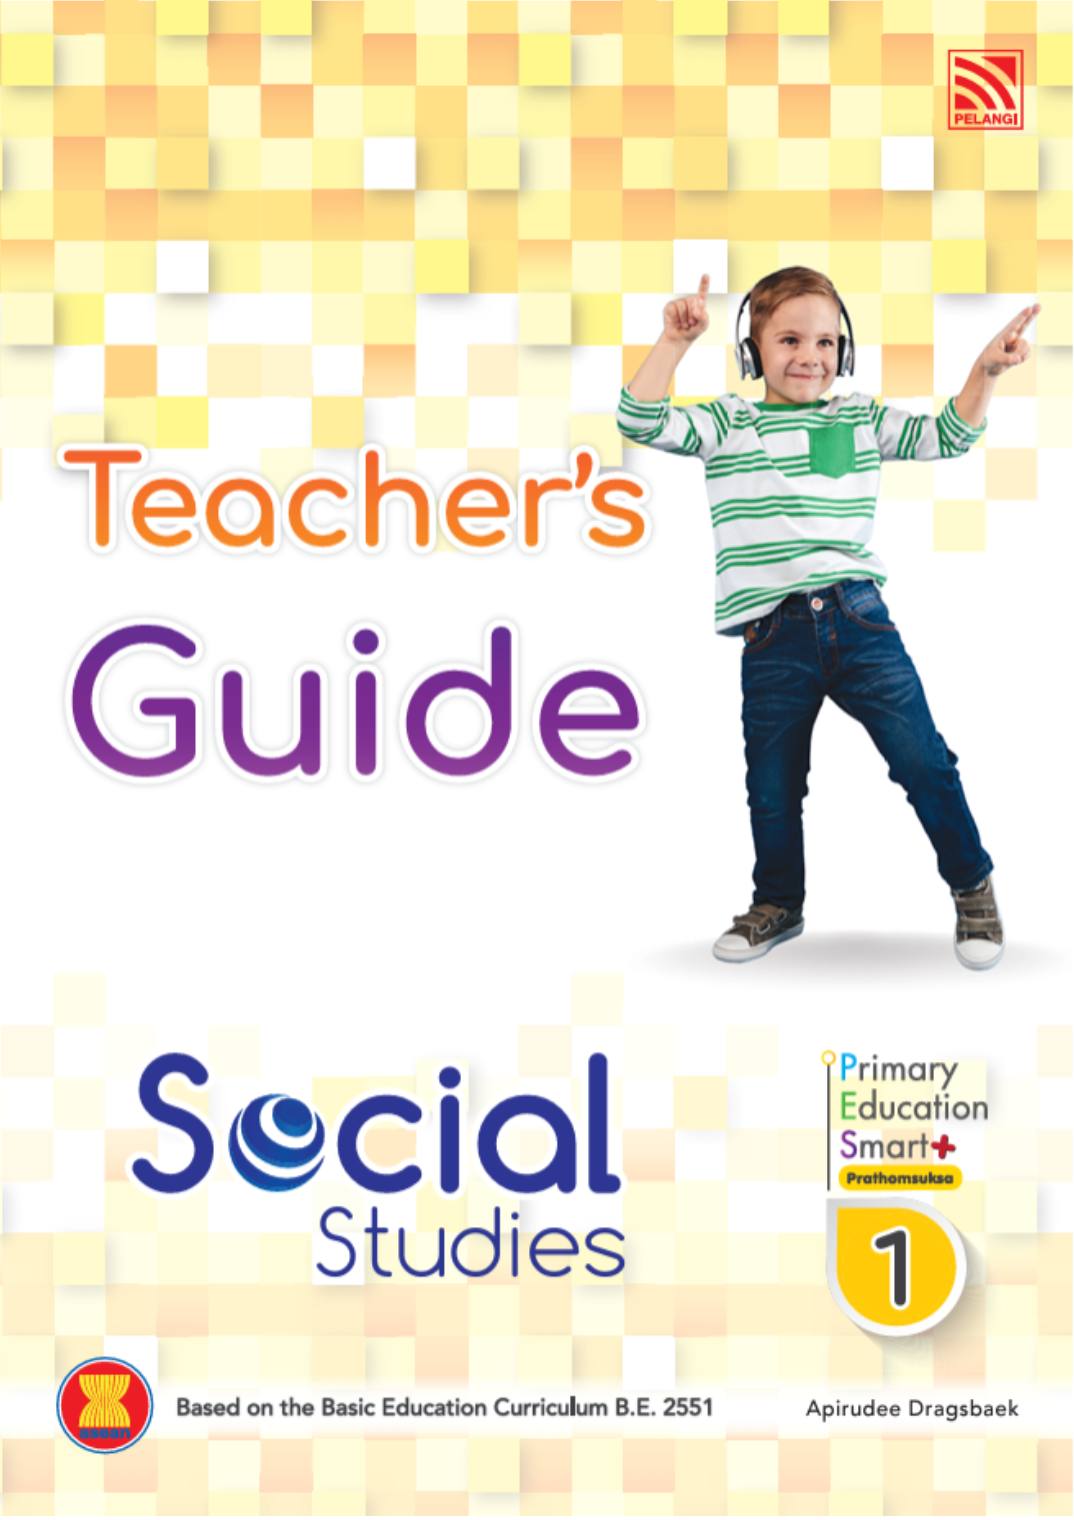 Teacher Guide Primary Smart Plus Social Studies P1